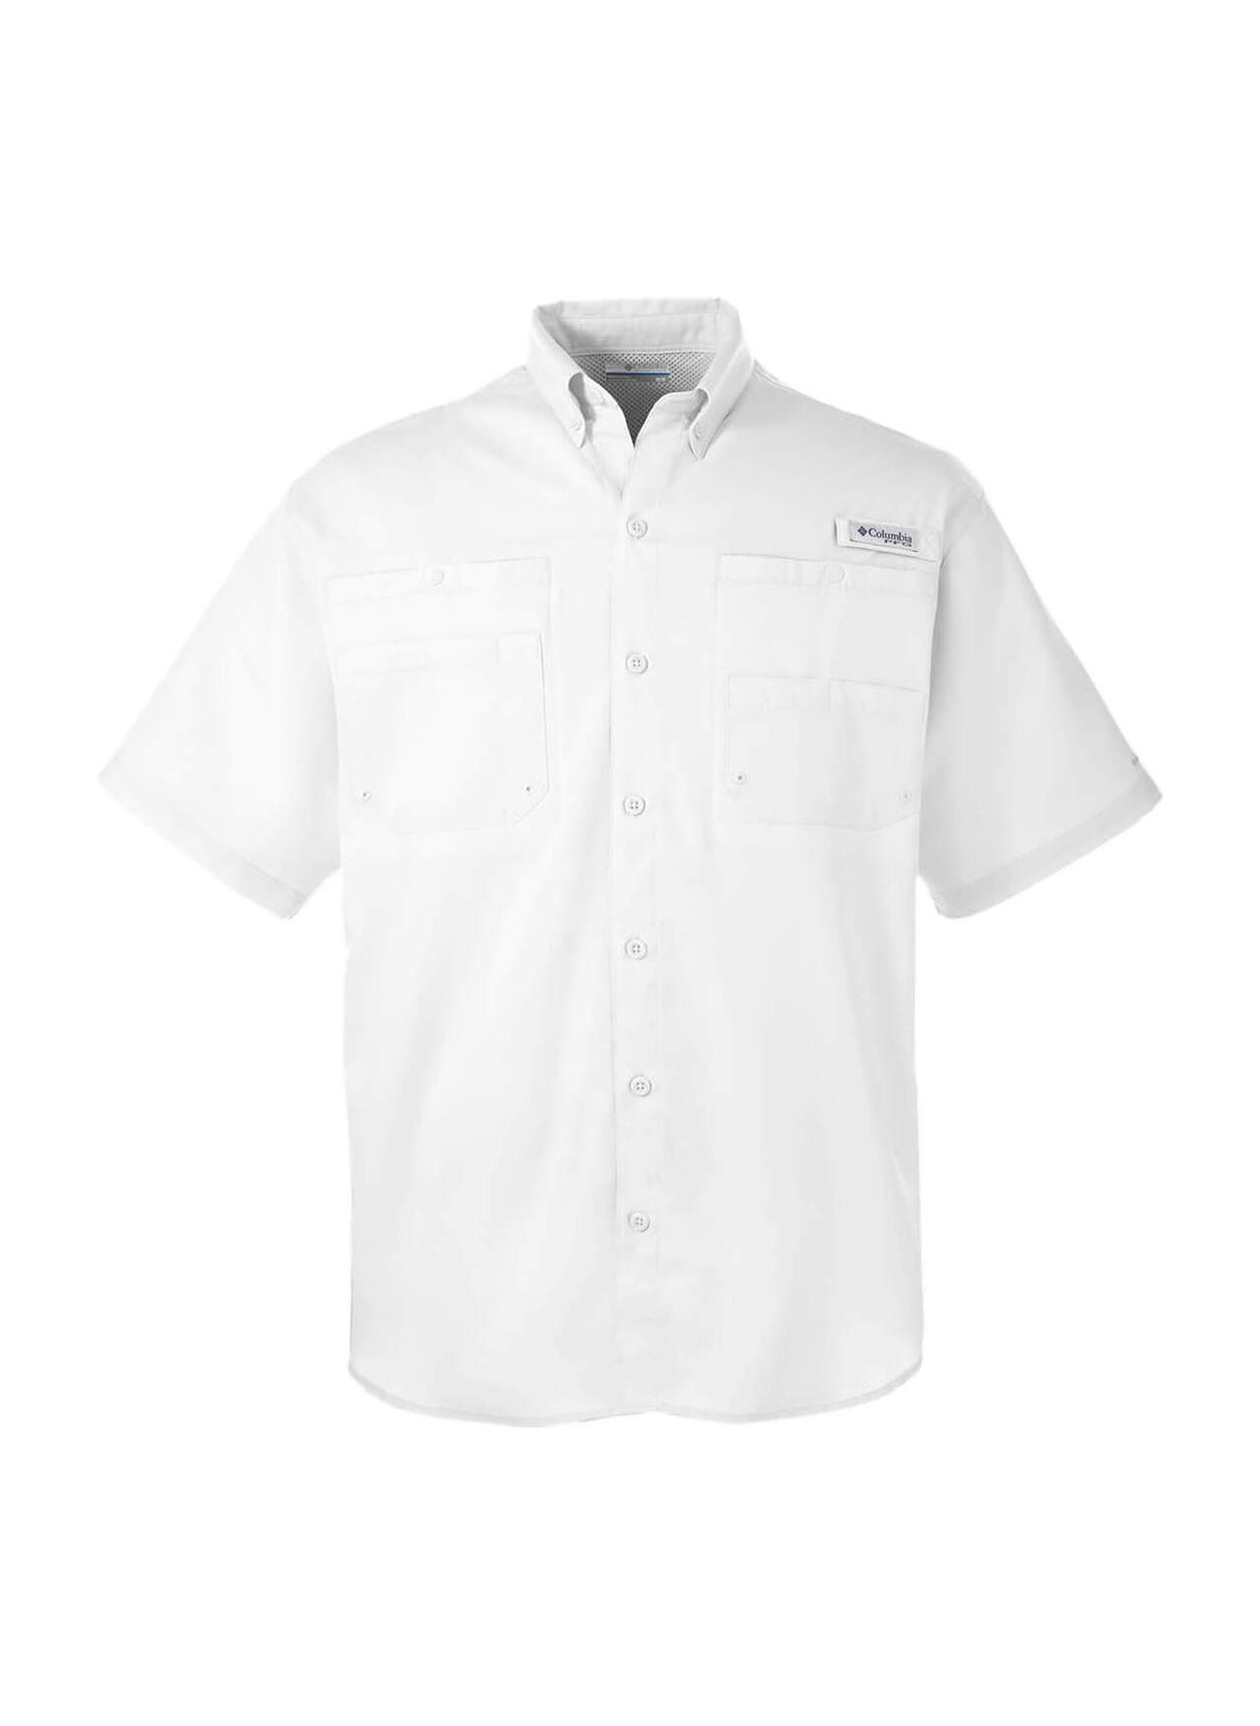 Columbia Men&s Collegiate Navy Tamiami II Long Sleeve Shirt